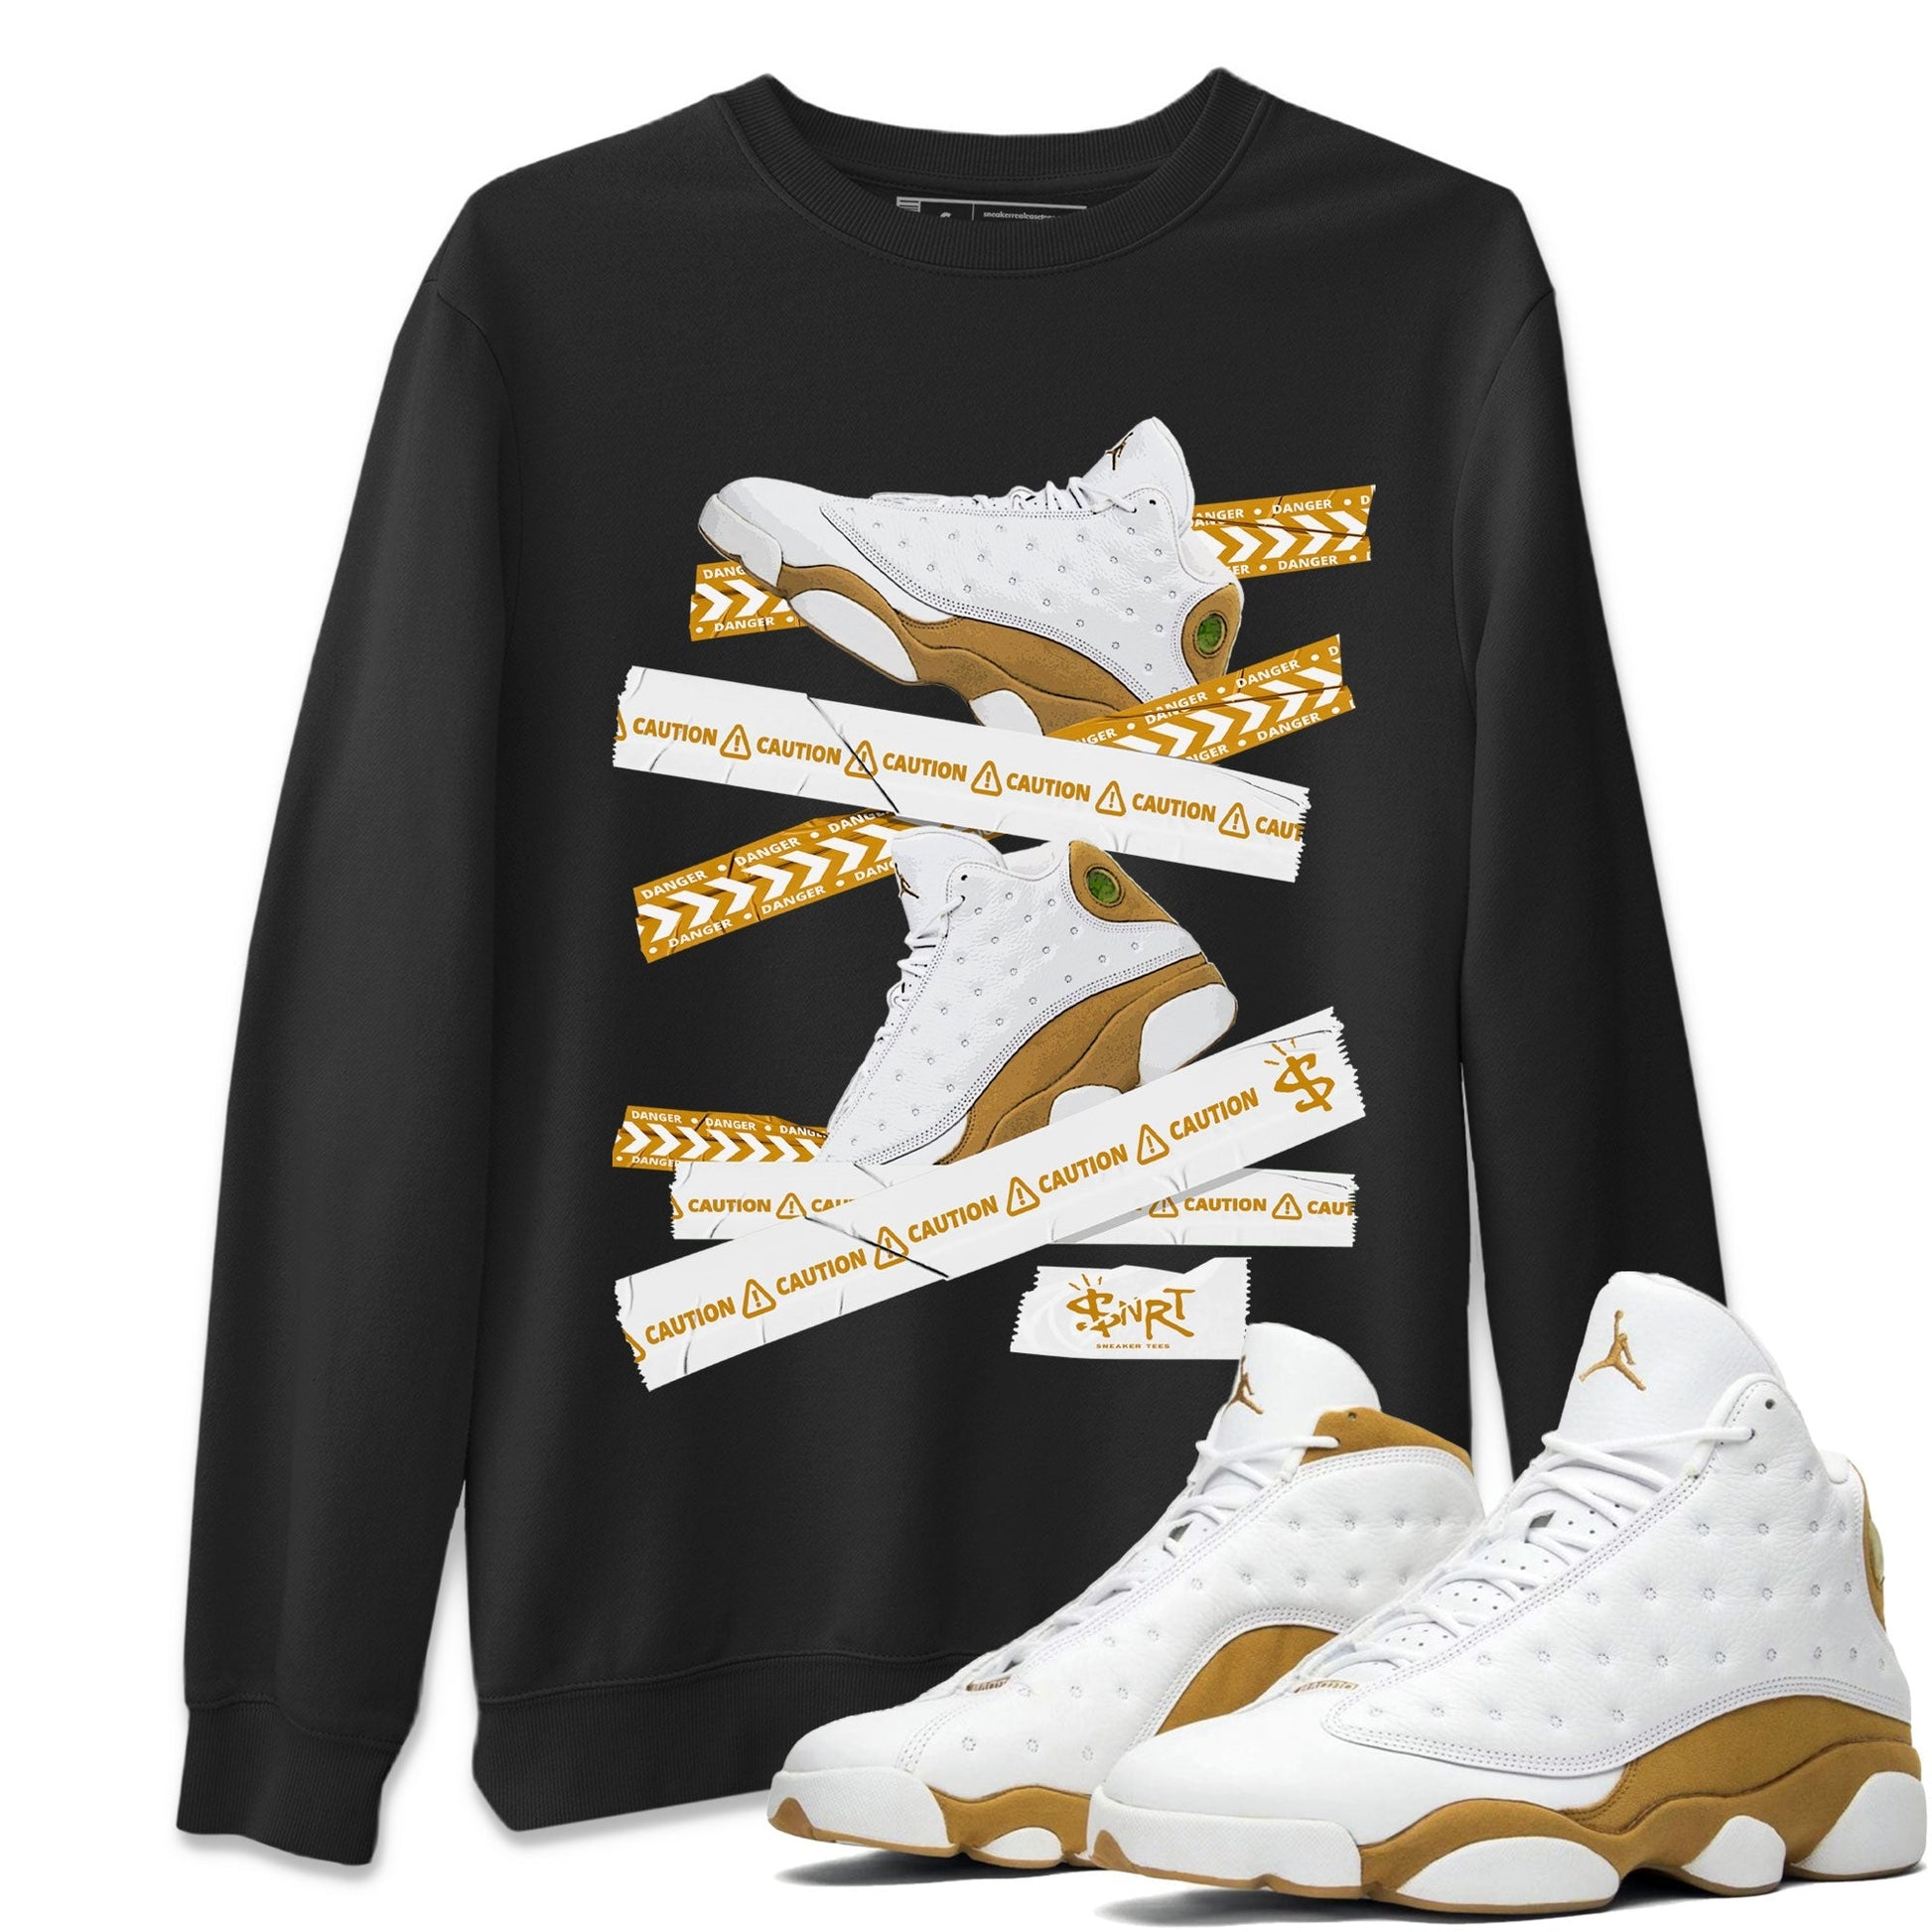 Air Jordan 13 Wheat shirt to match jordans Caution Tape Streetwear Sneaker Shirt 13 Wheat Drip Gear Zone Sneaker Matching Clothing Unisex Black 1 T-Shirt